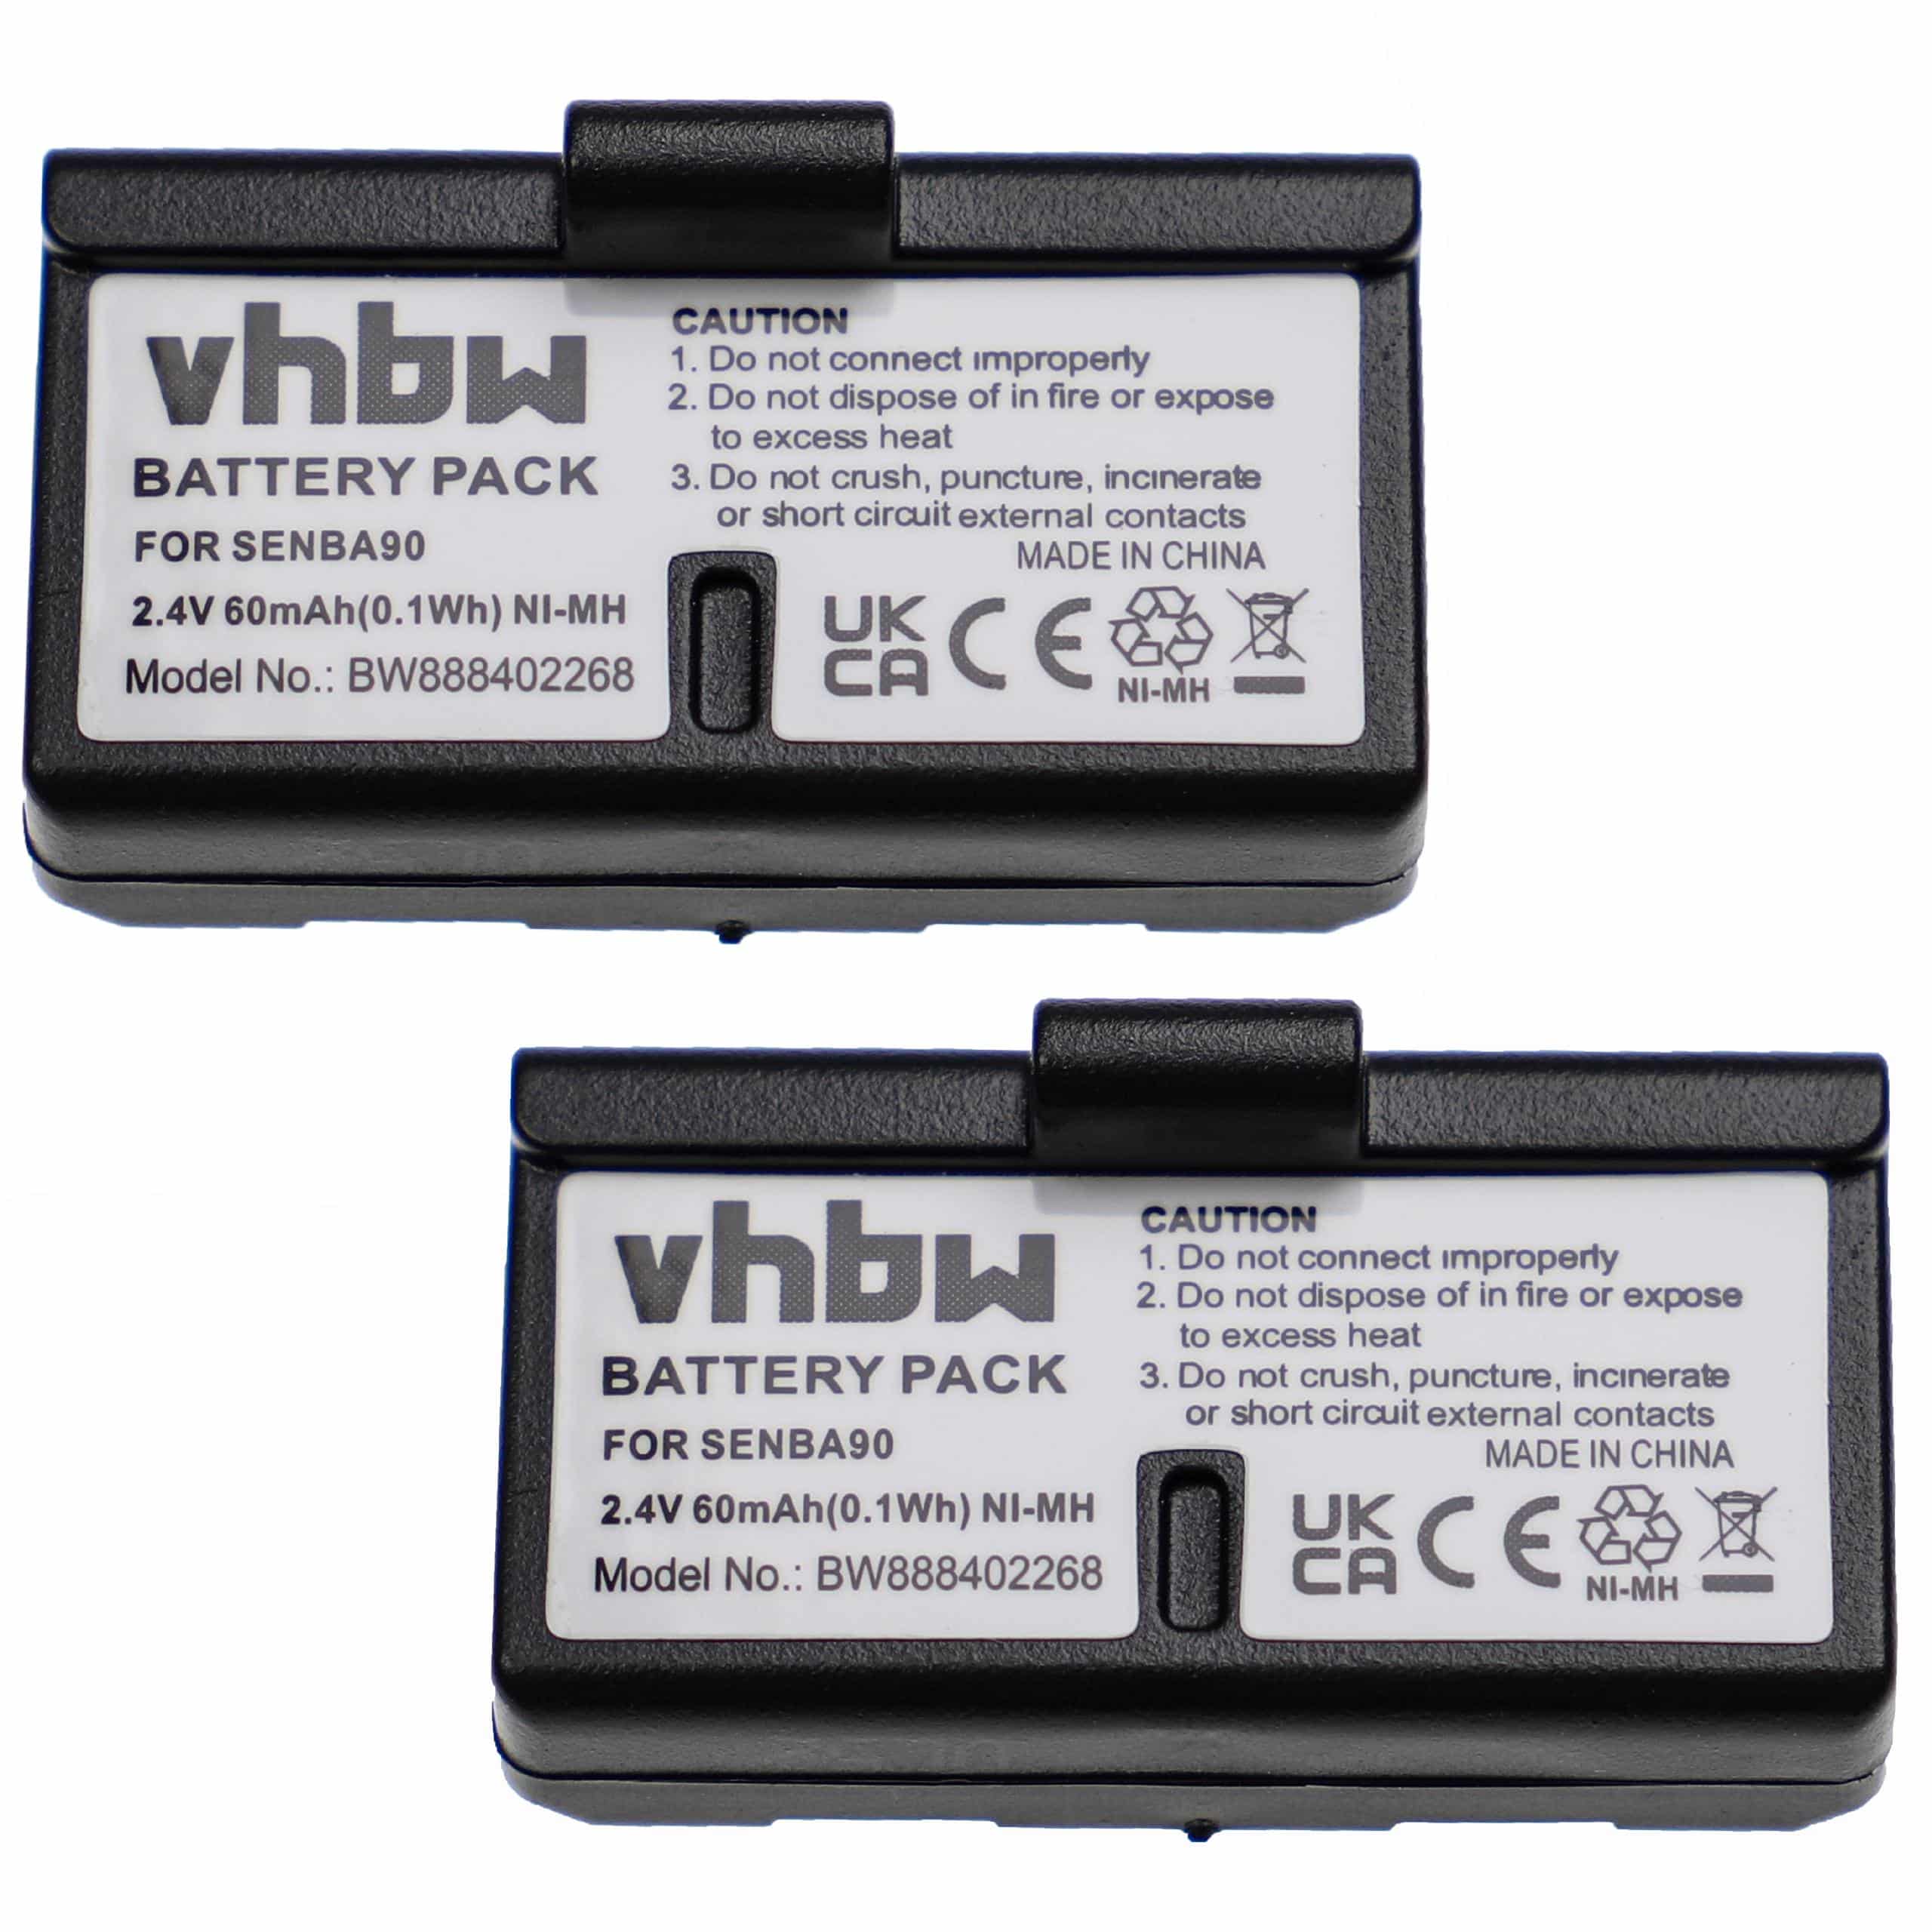 Wireless Headset Battery (2 Units) Replacement for Sennheiser BA90, E90, E180 - 60mAh 2.4V NiMH